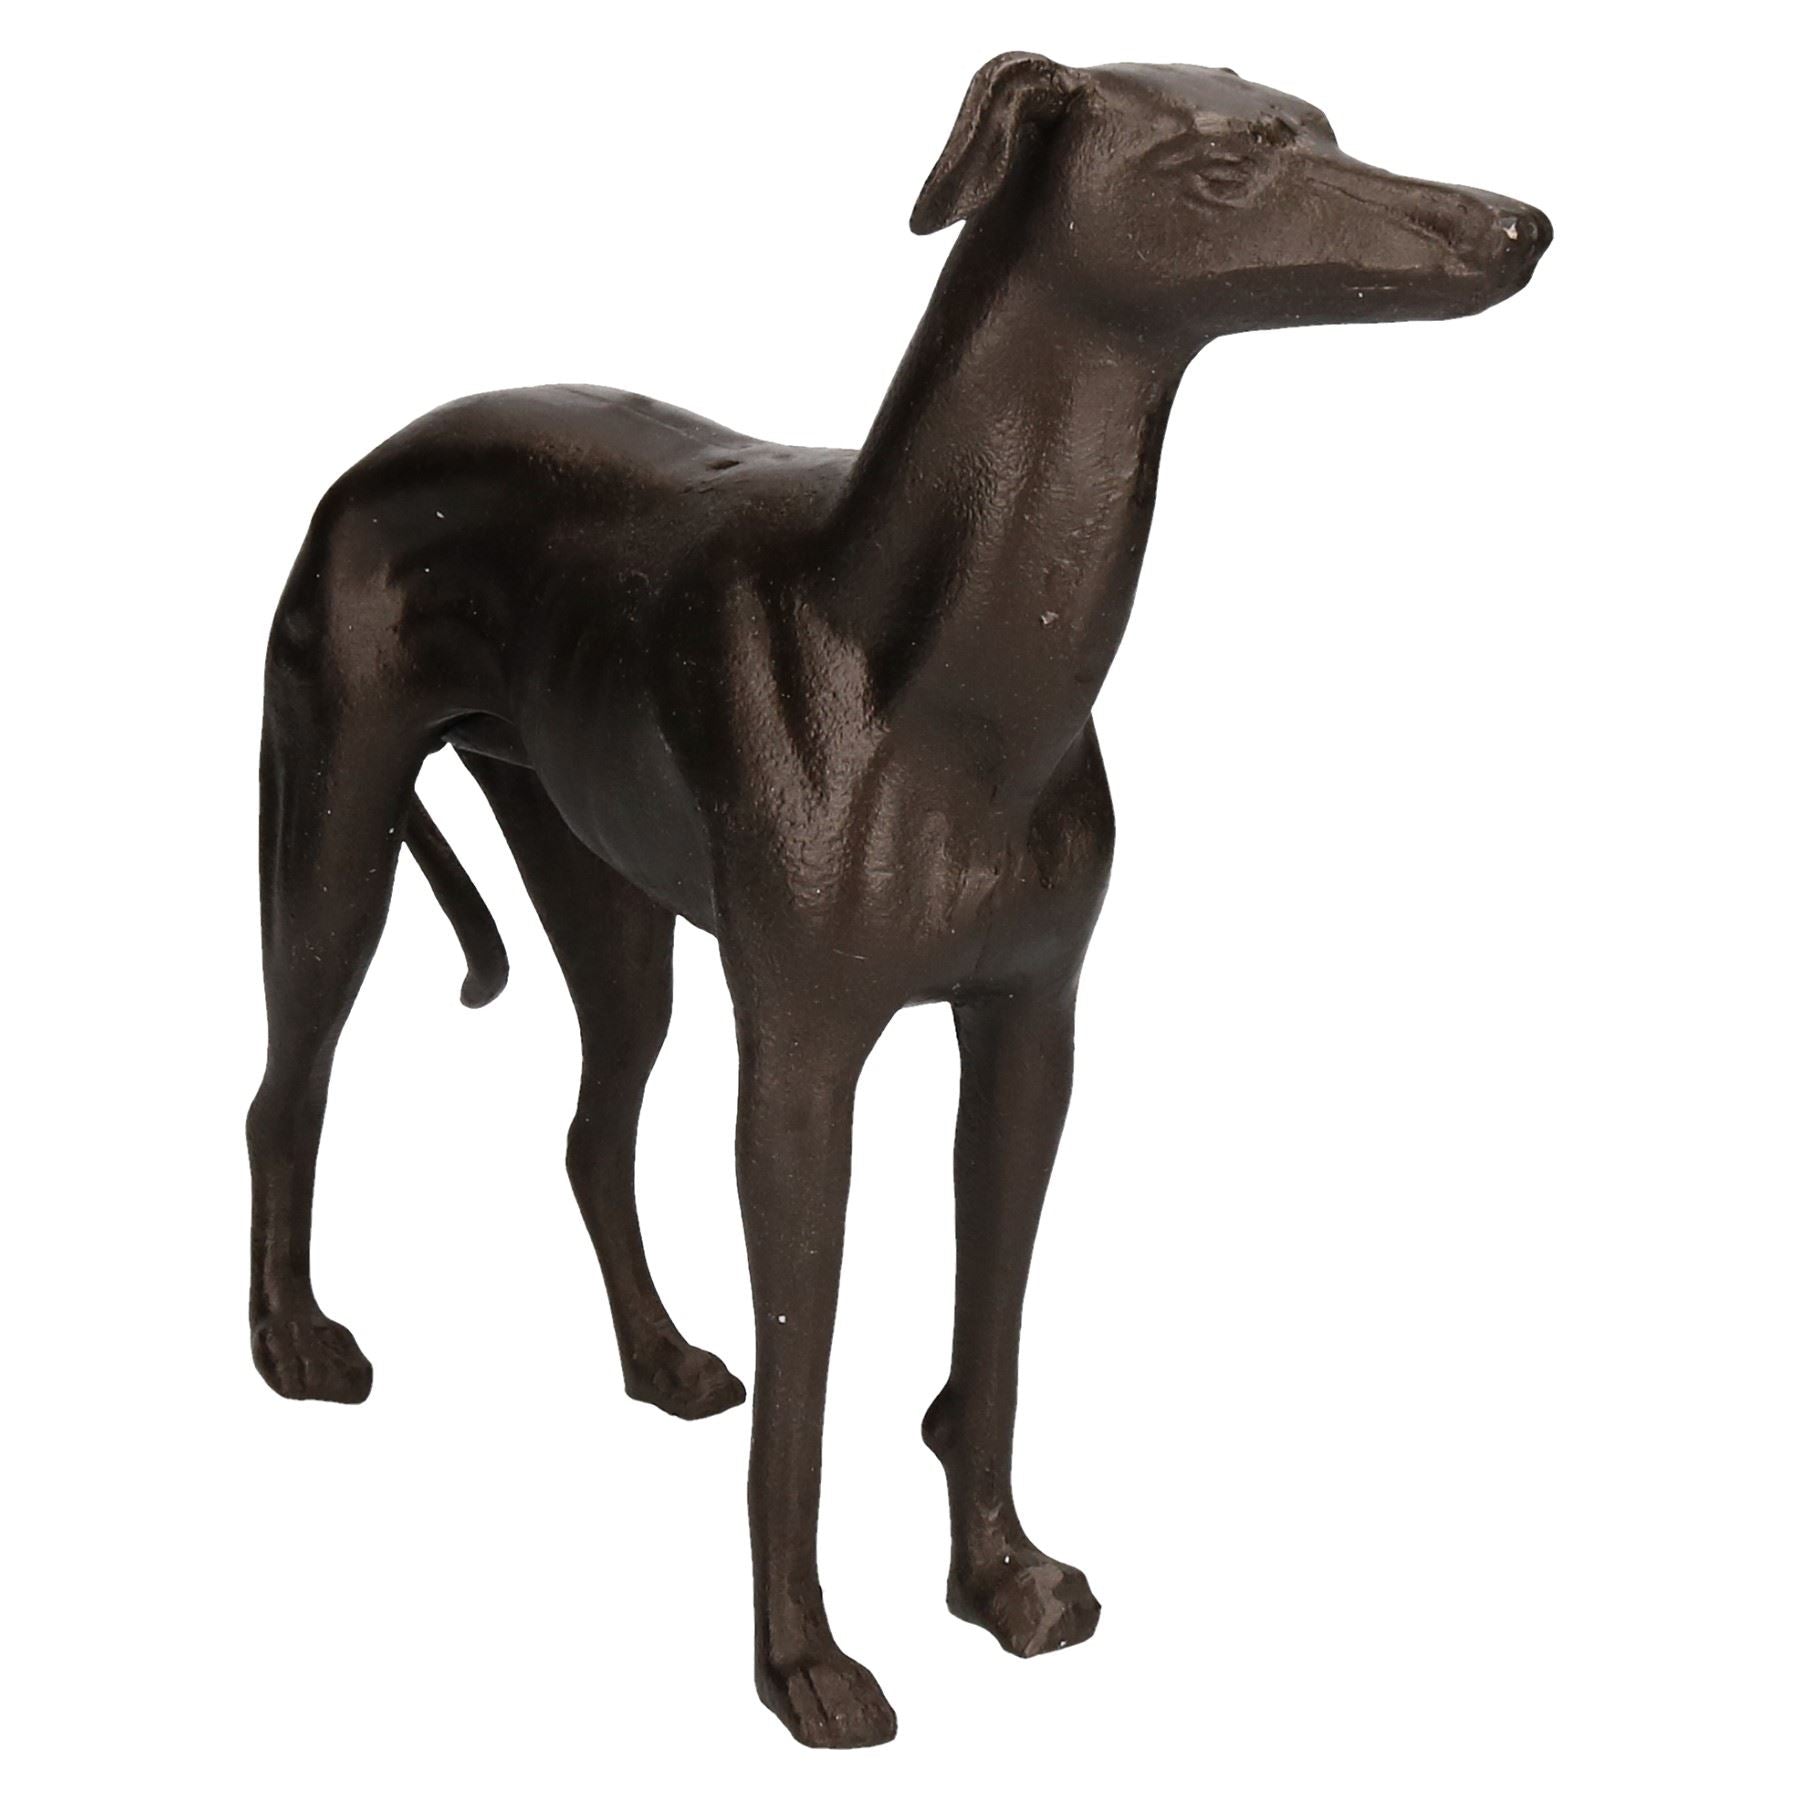 Grey Hound Whippet Dog Cast Iron Statue Figure Trophy Ornament Sculpture